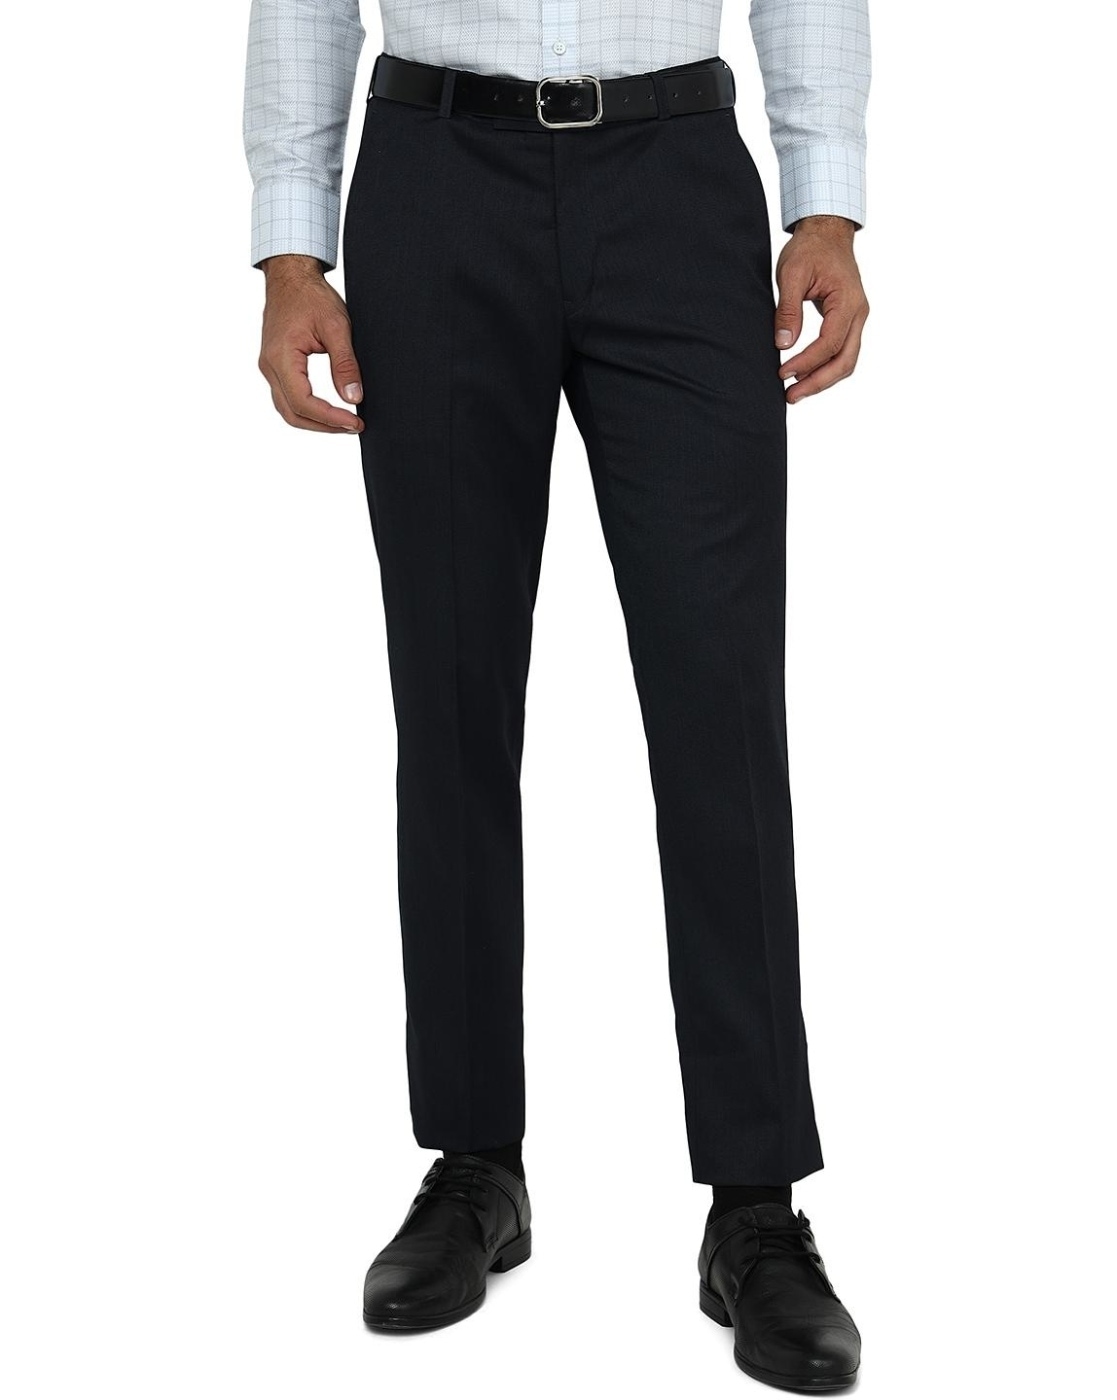 Buy Black Trousers & Pants for Men by Hangup Trend Online | Ajio.com